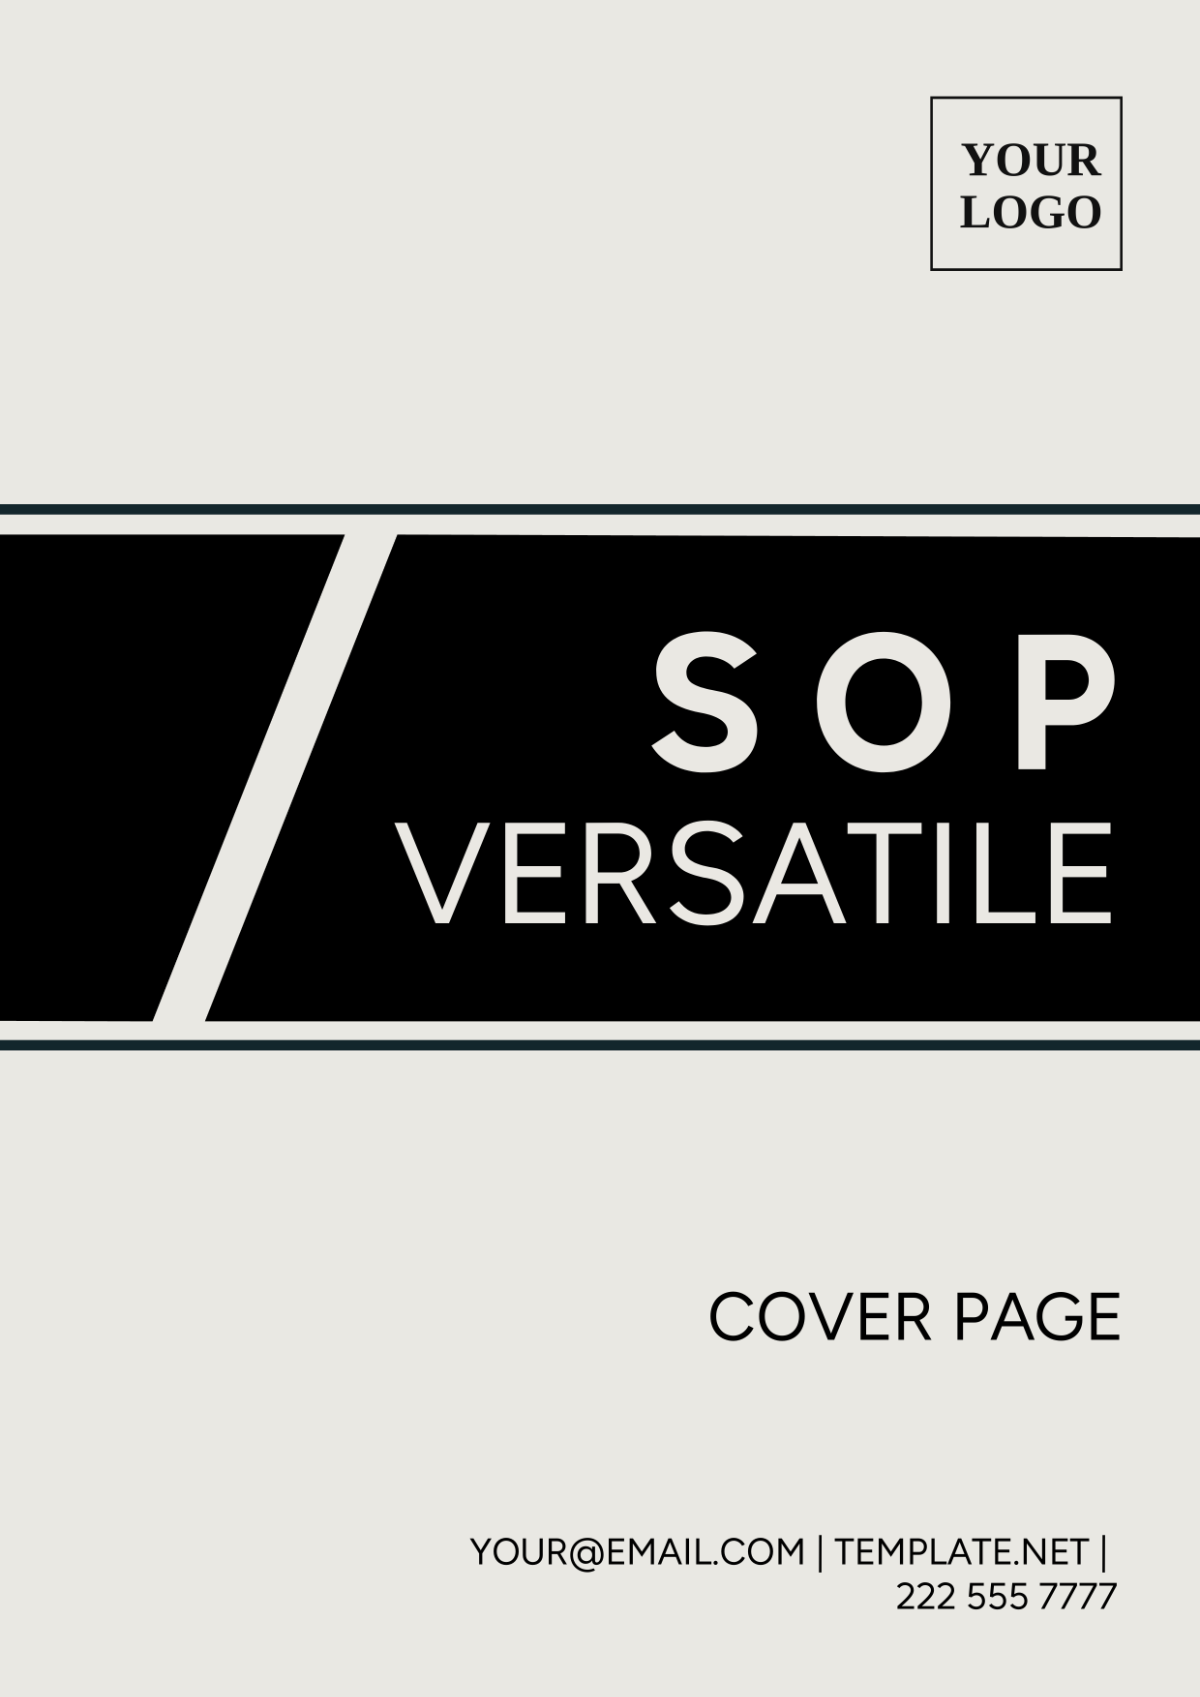 SOP Versatile Cover Page Template